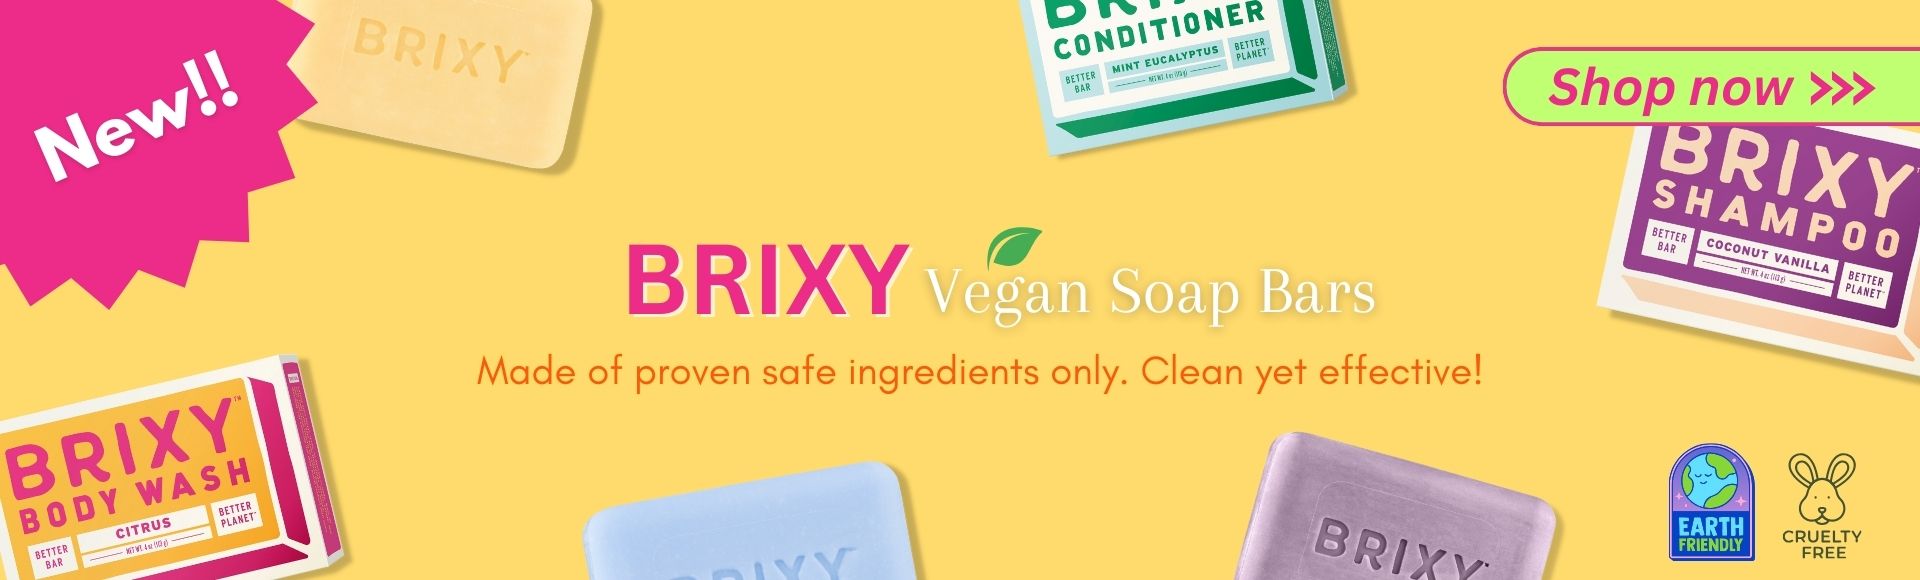 Brixy Vegan Soap Bar Shampoo Conditioner Body Wash